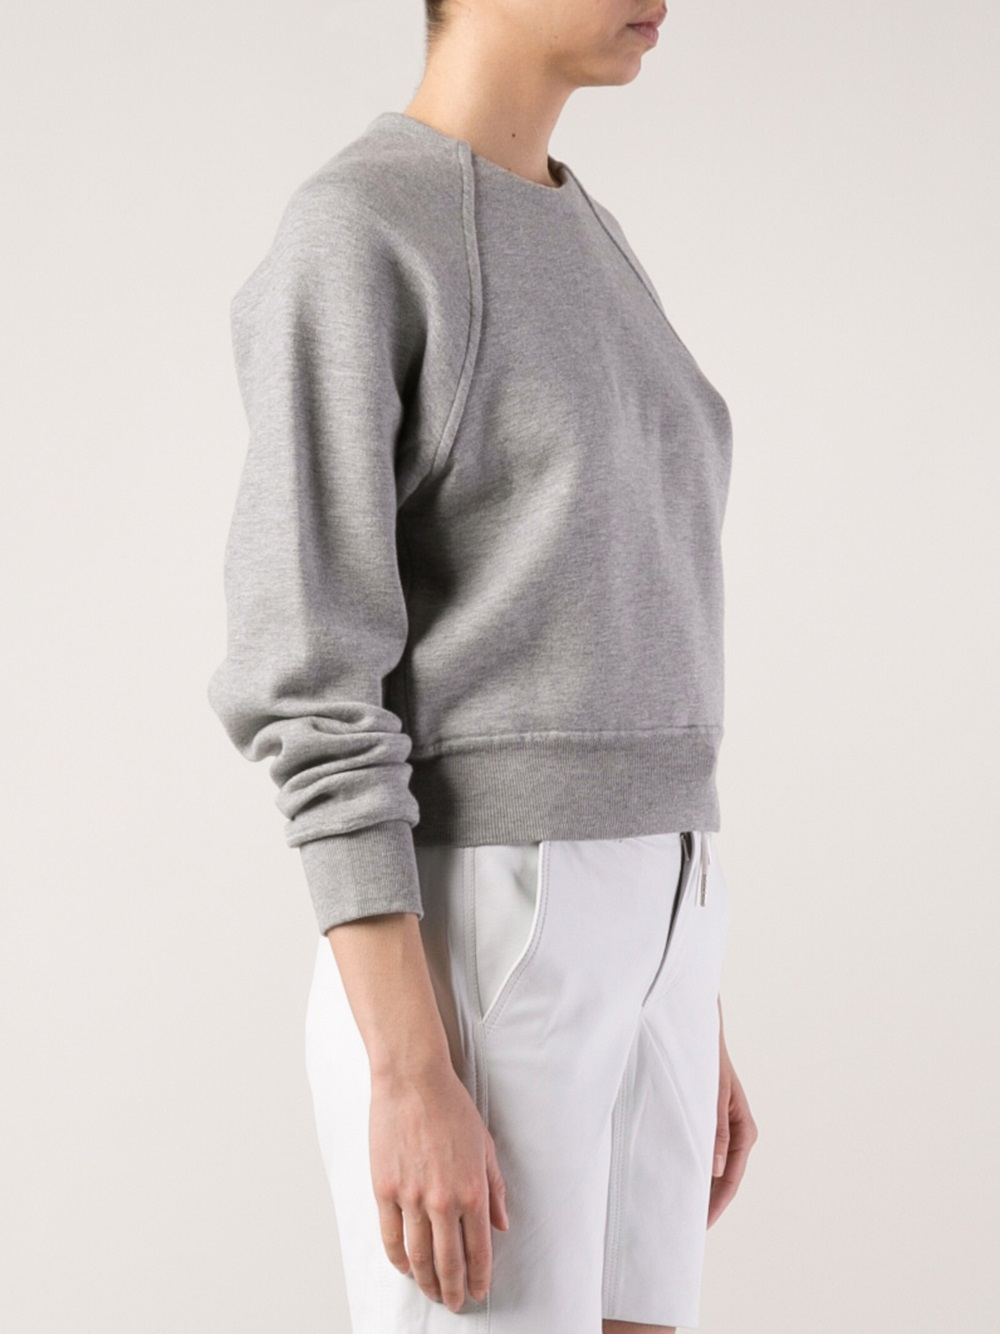 Lyst - Alexander Wang Basic Sweatshirt in Gray